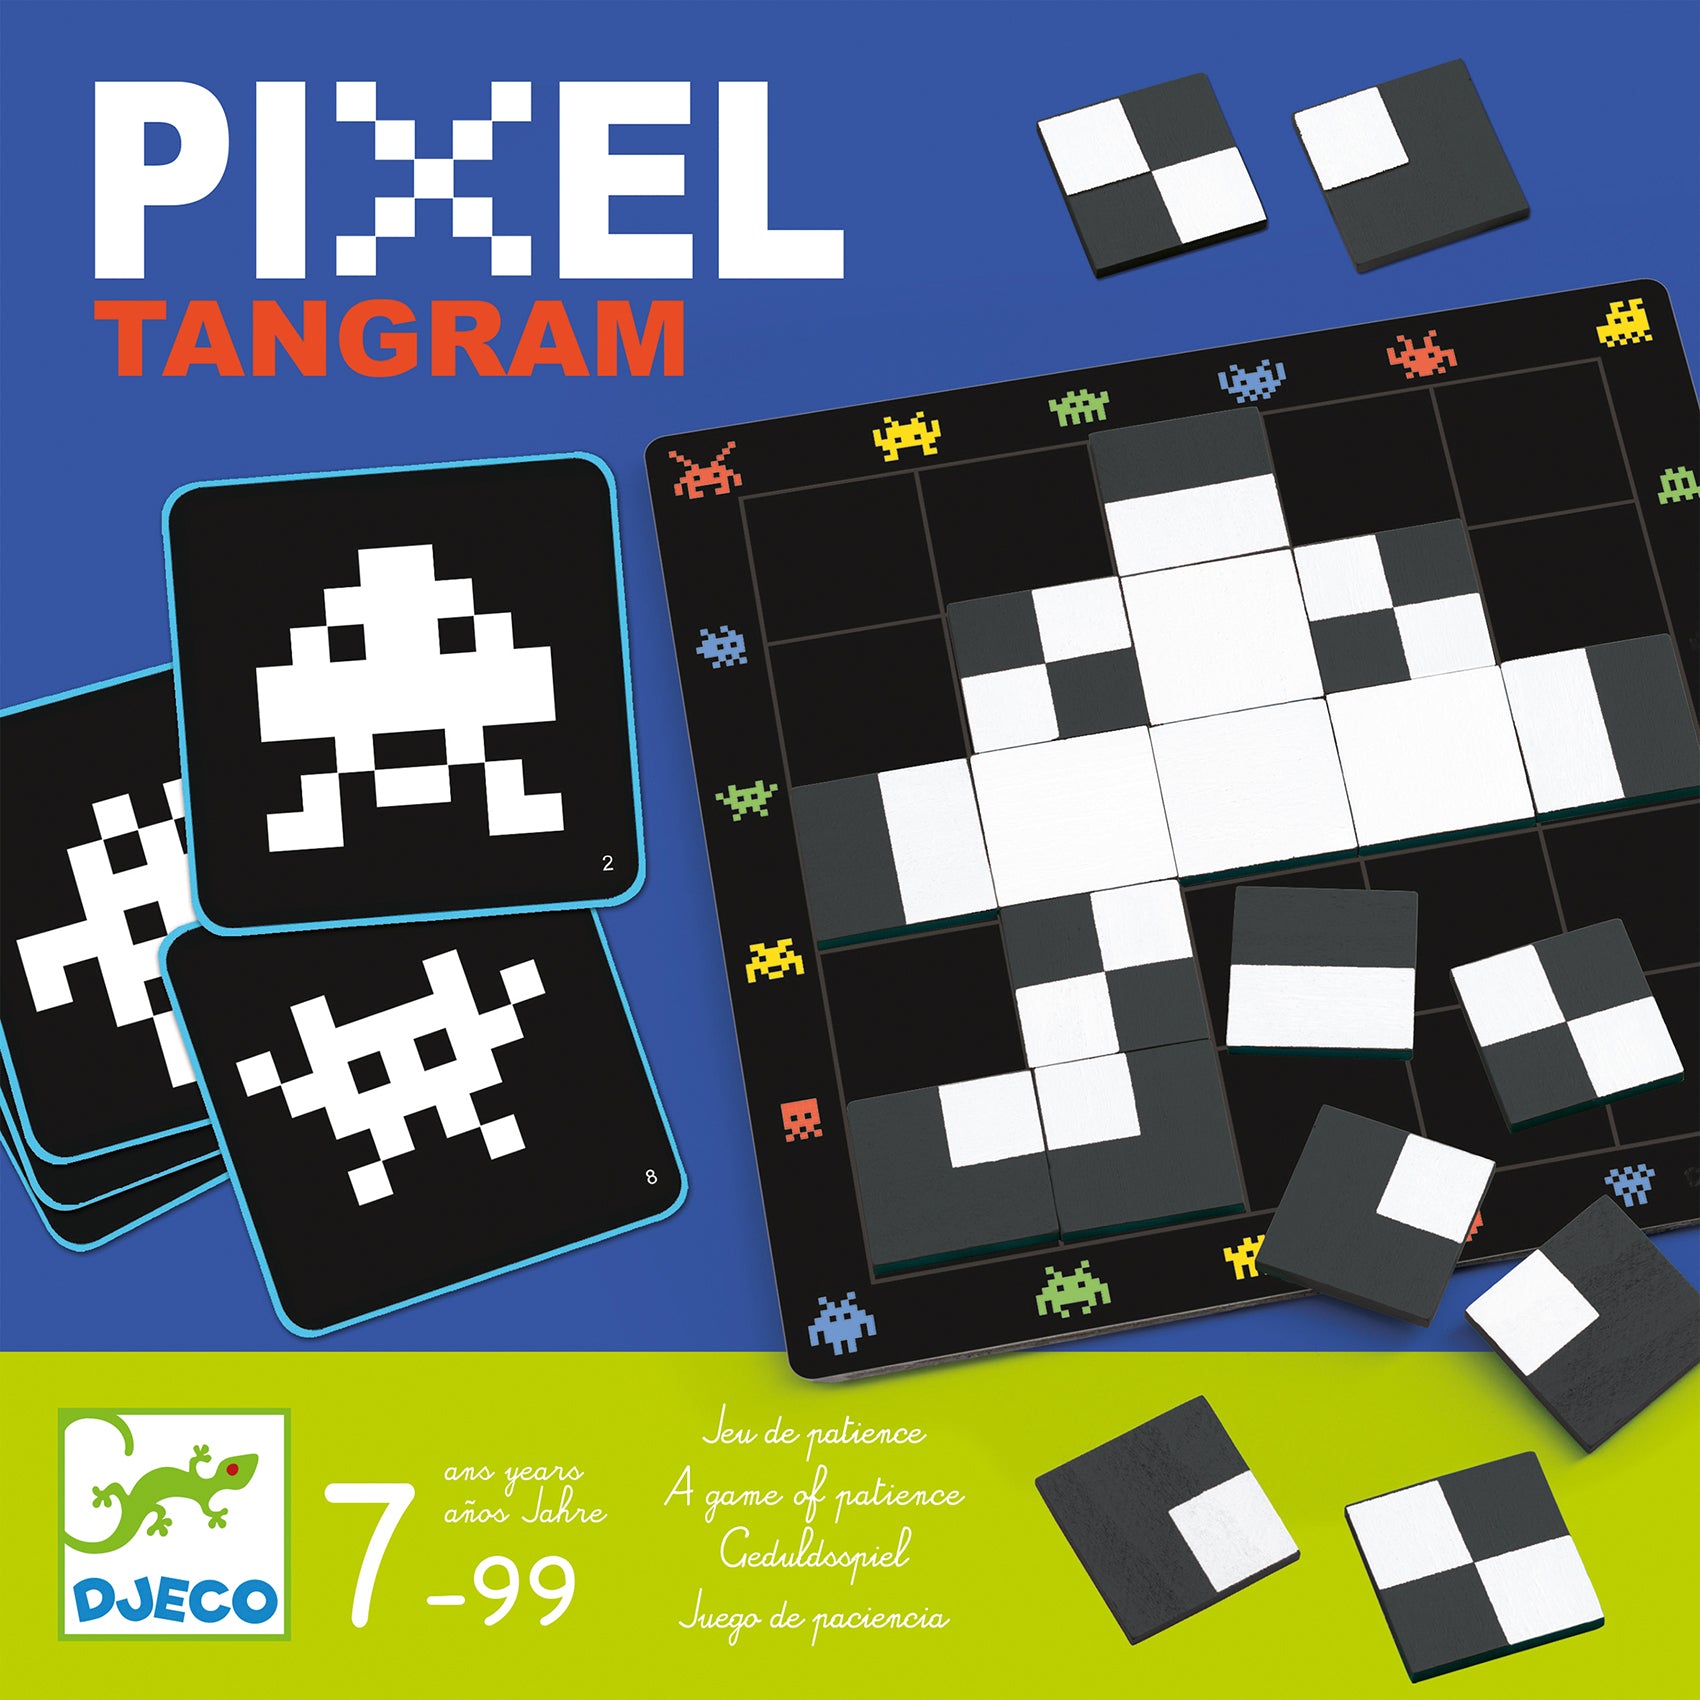 Djeco | Pixel Tangram